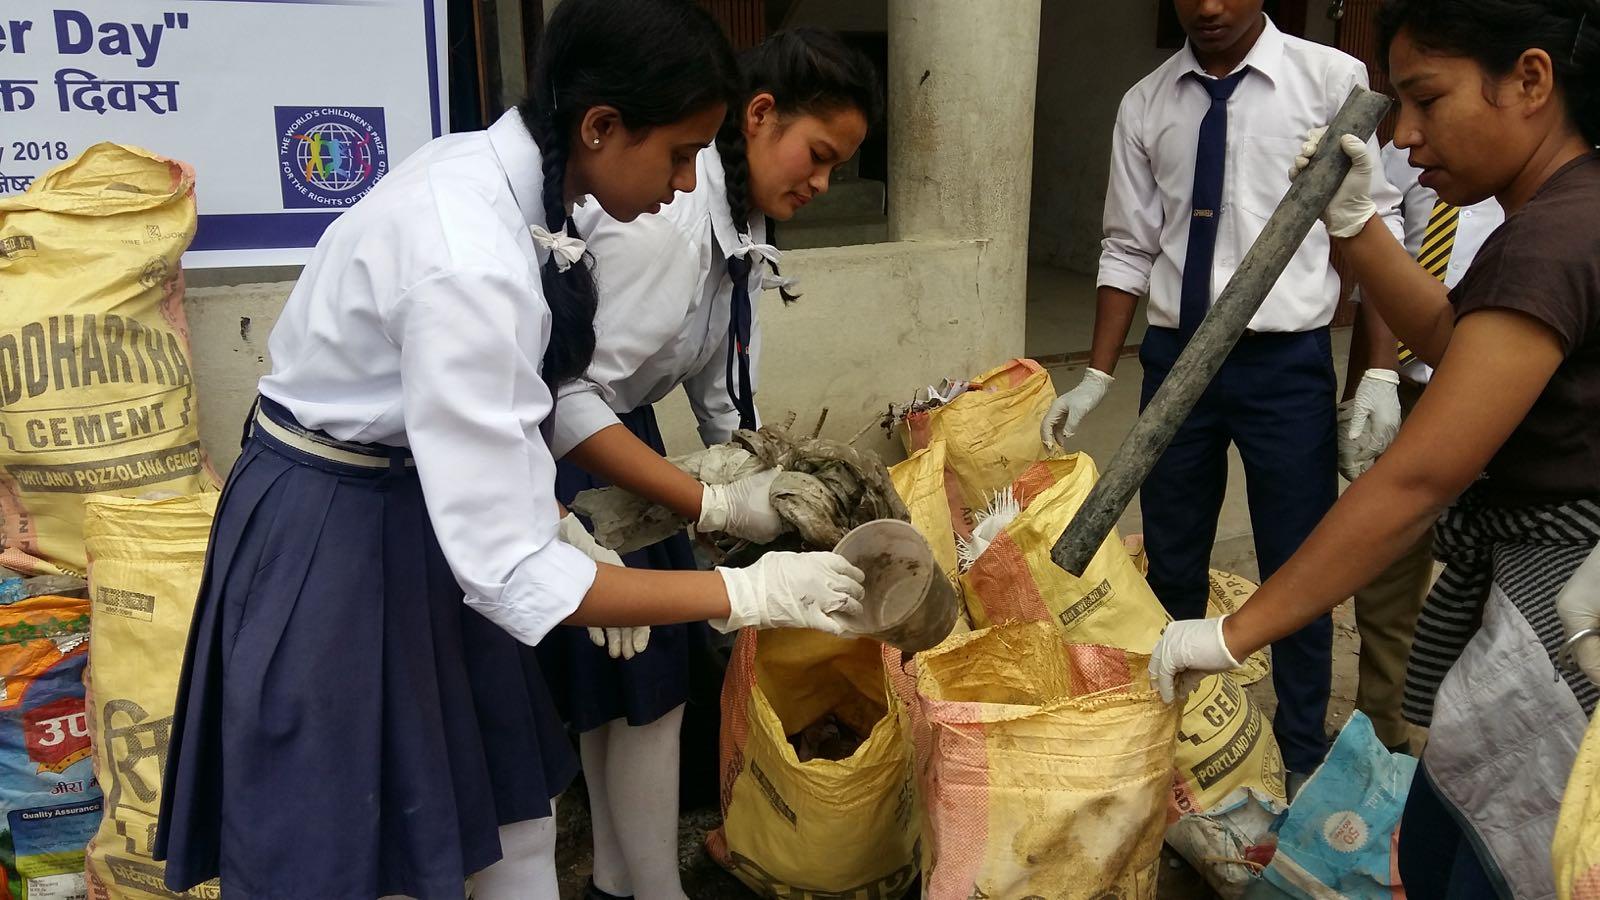 Children collecting trash